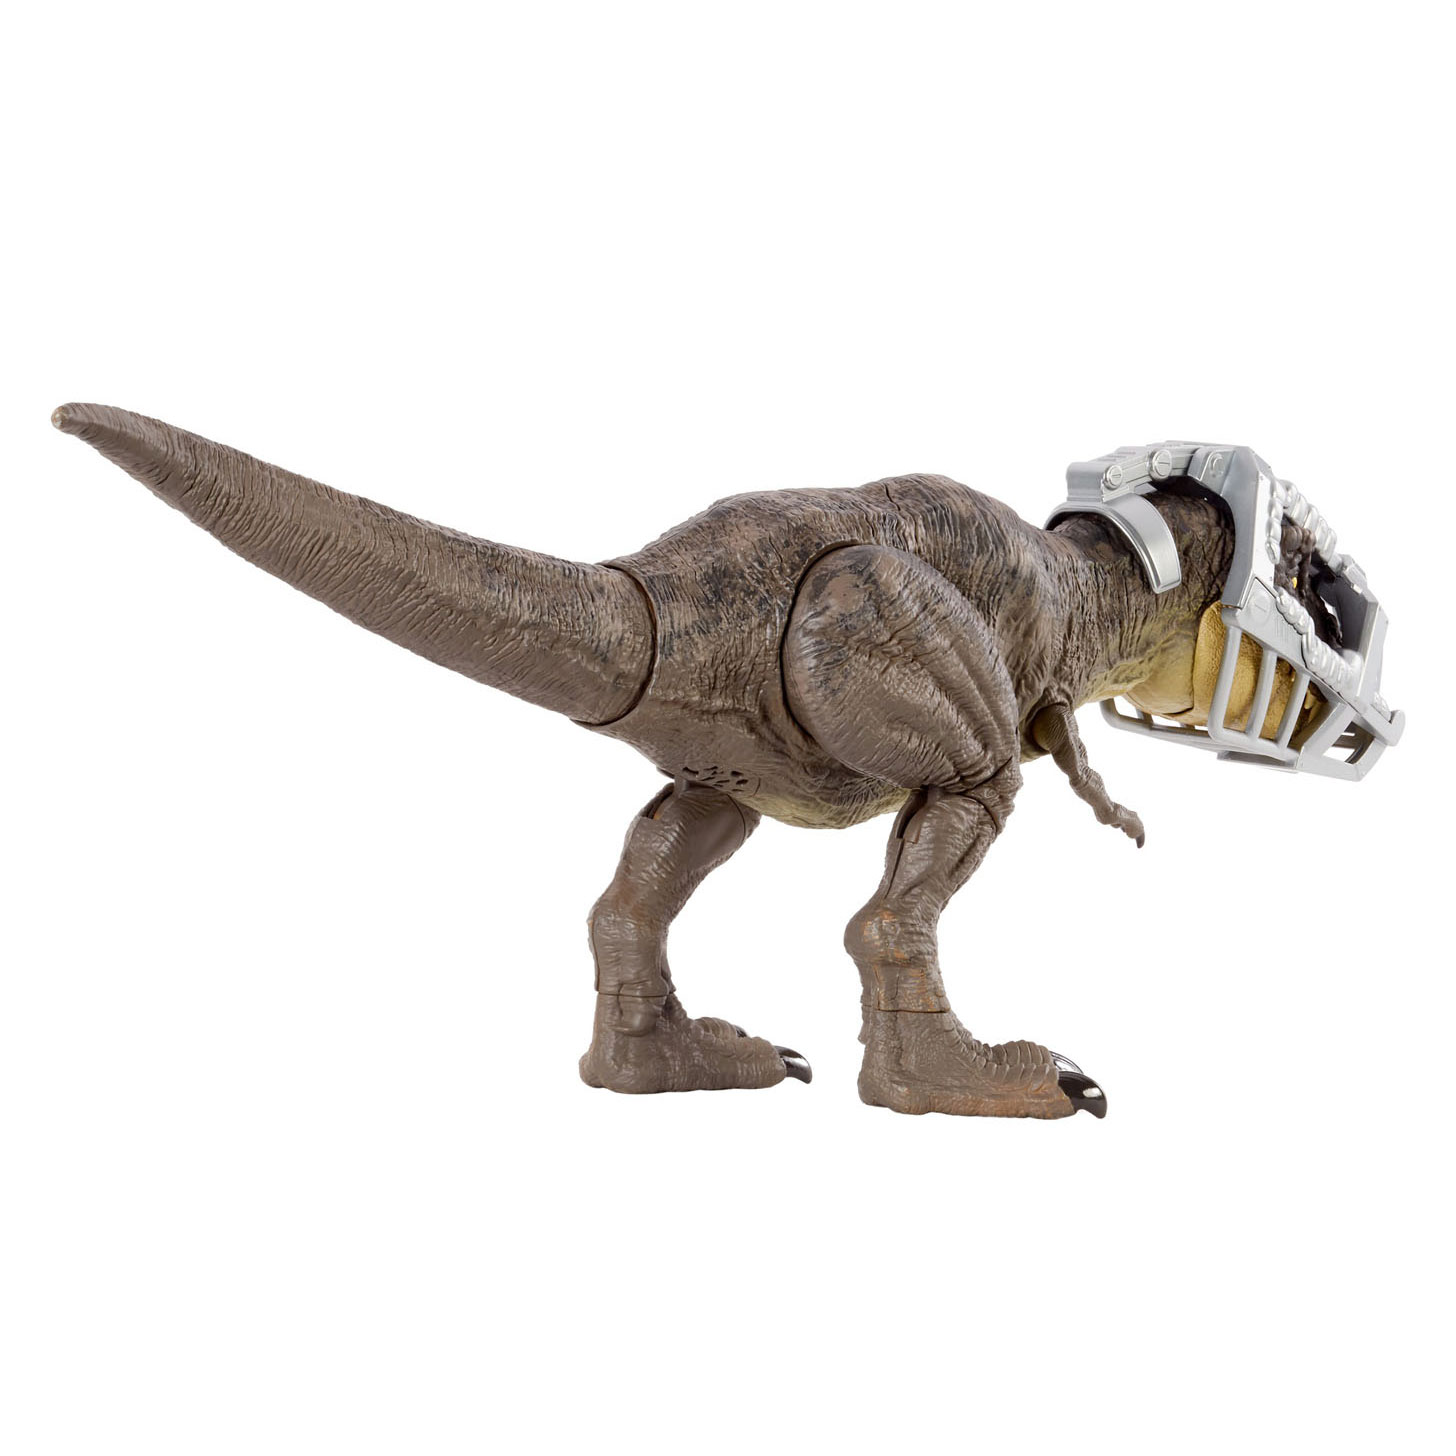 Jurassic World: Camp Cretaceous Stomp 'n Escape Tyrannosaurus Rex